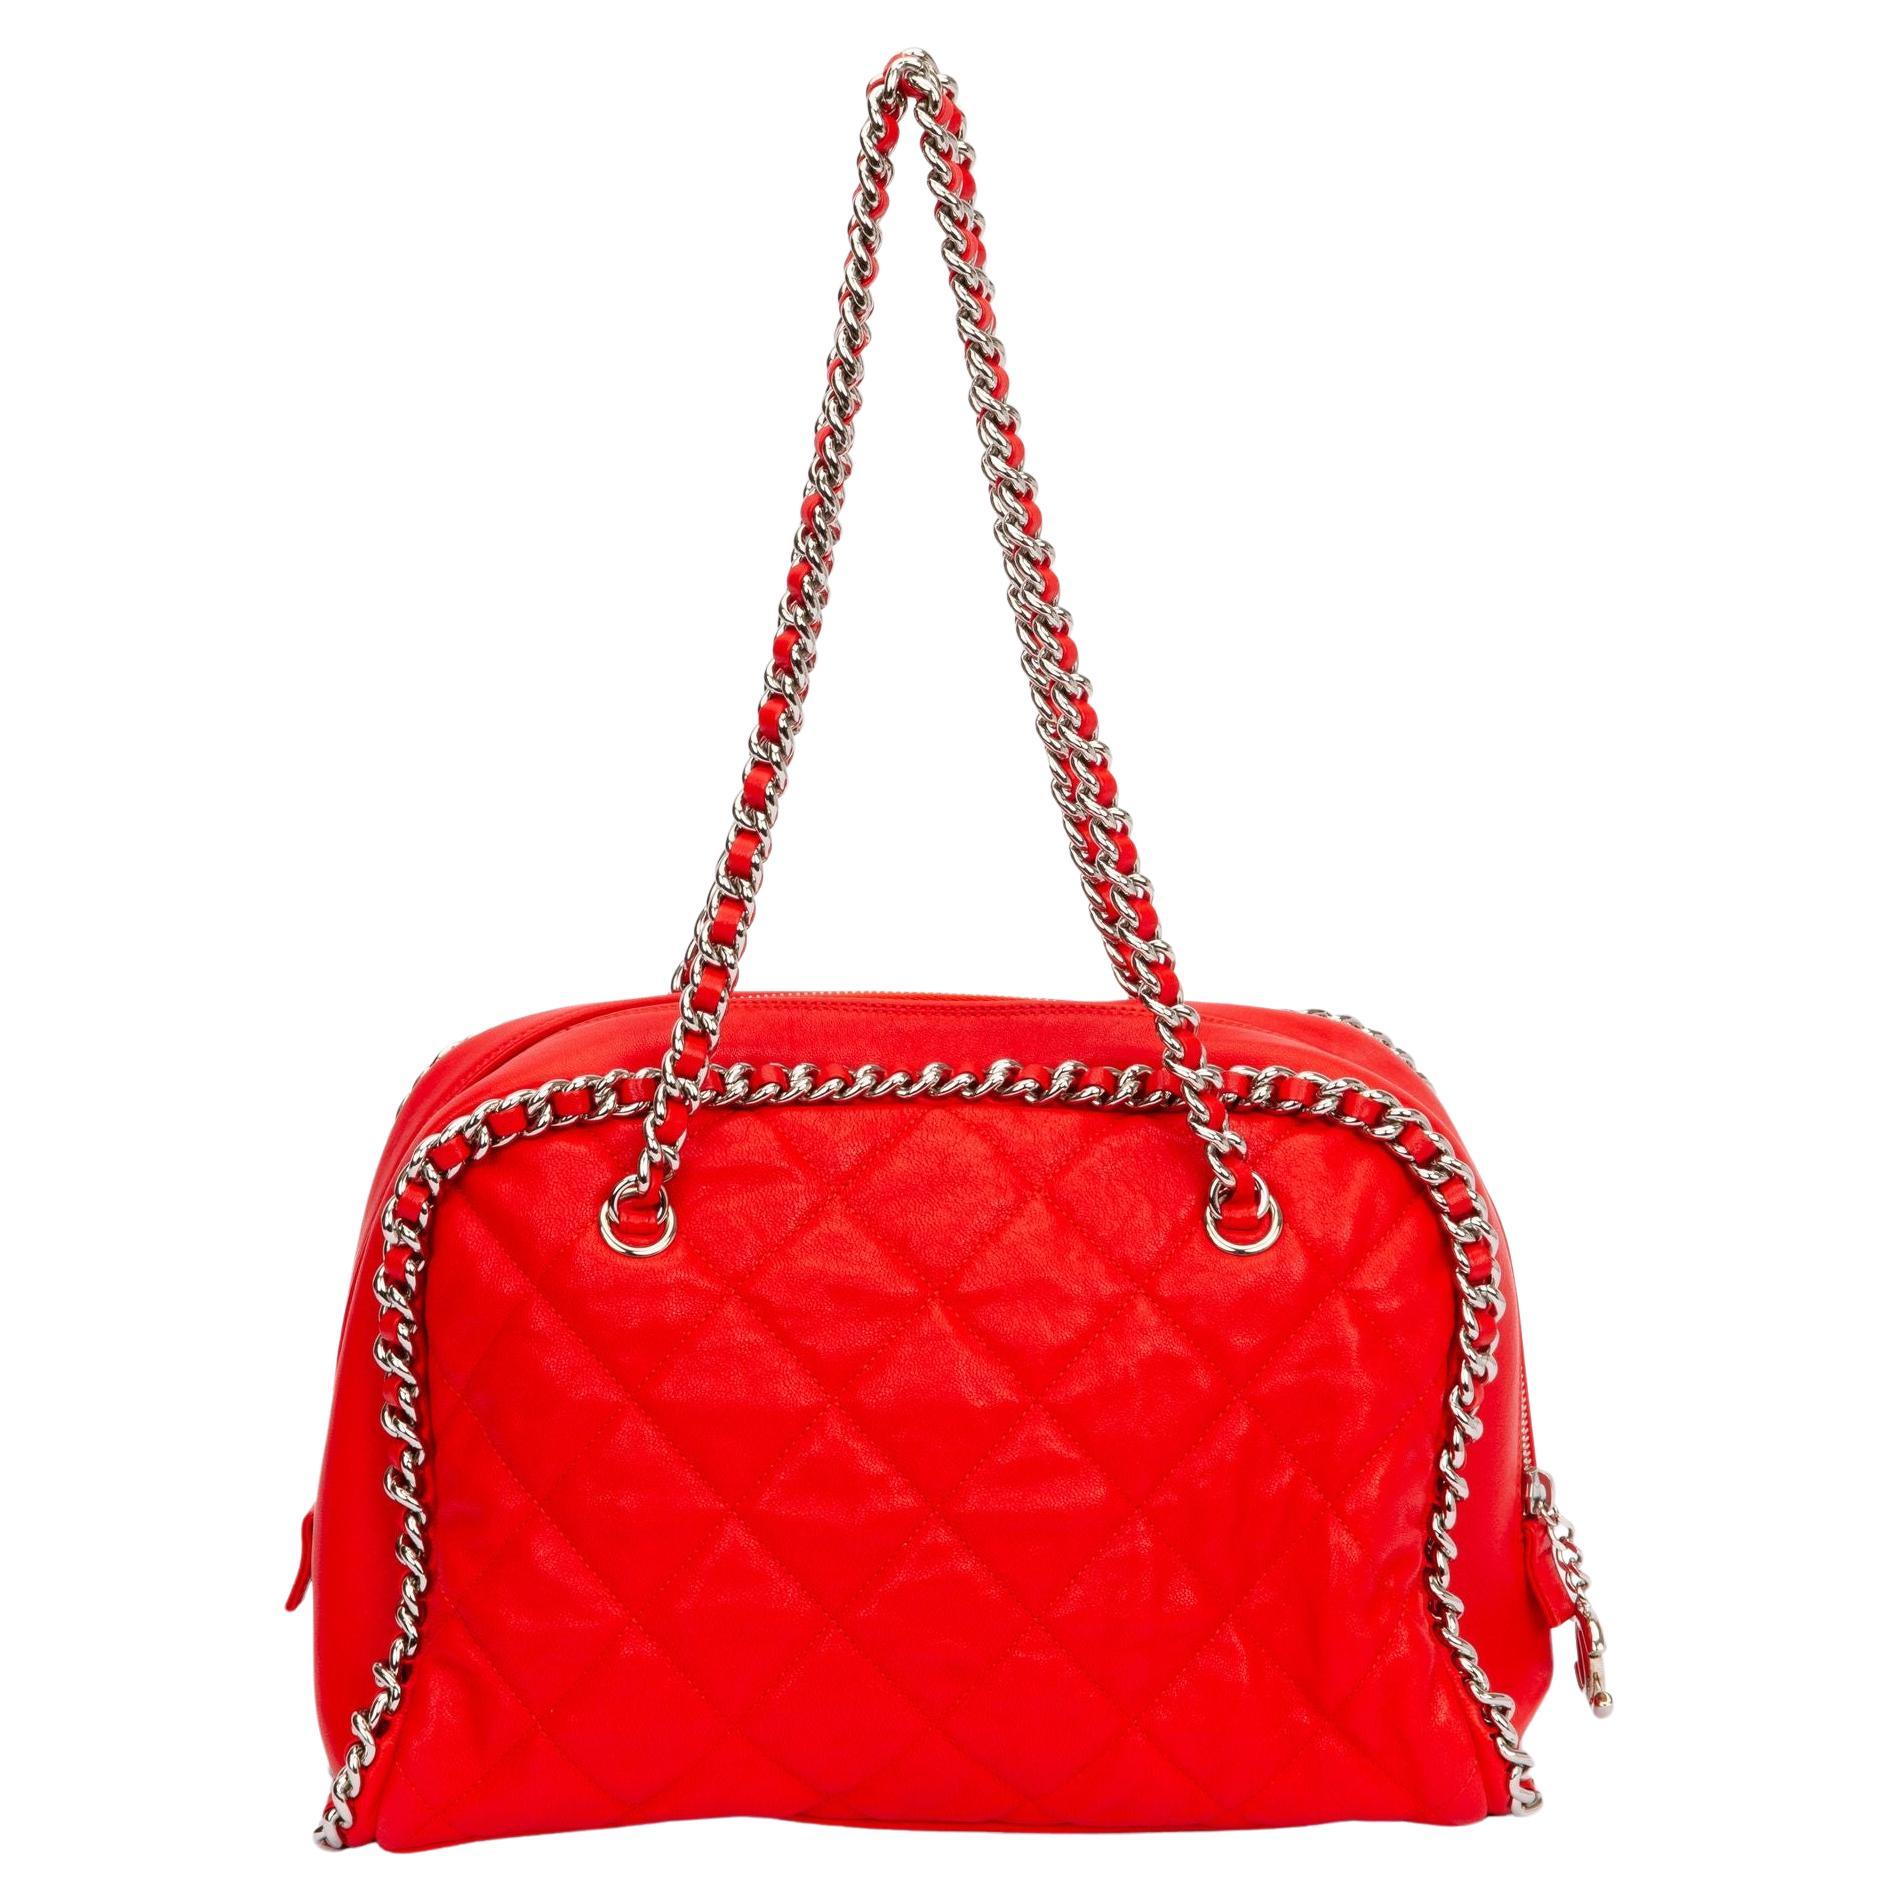 Chanel Red Chain Around Shoulder Bag